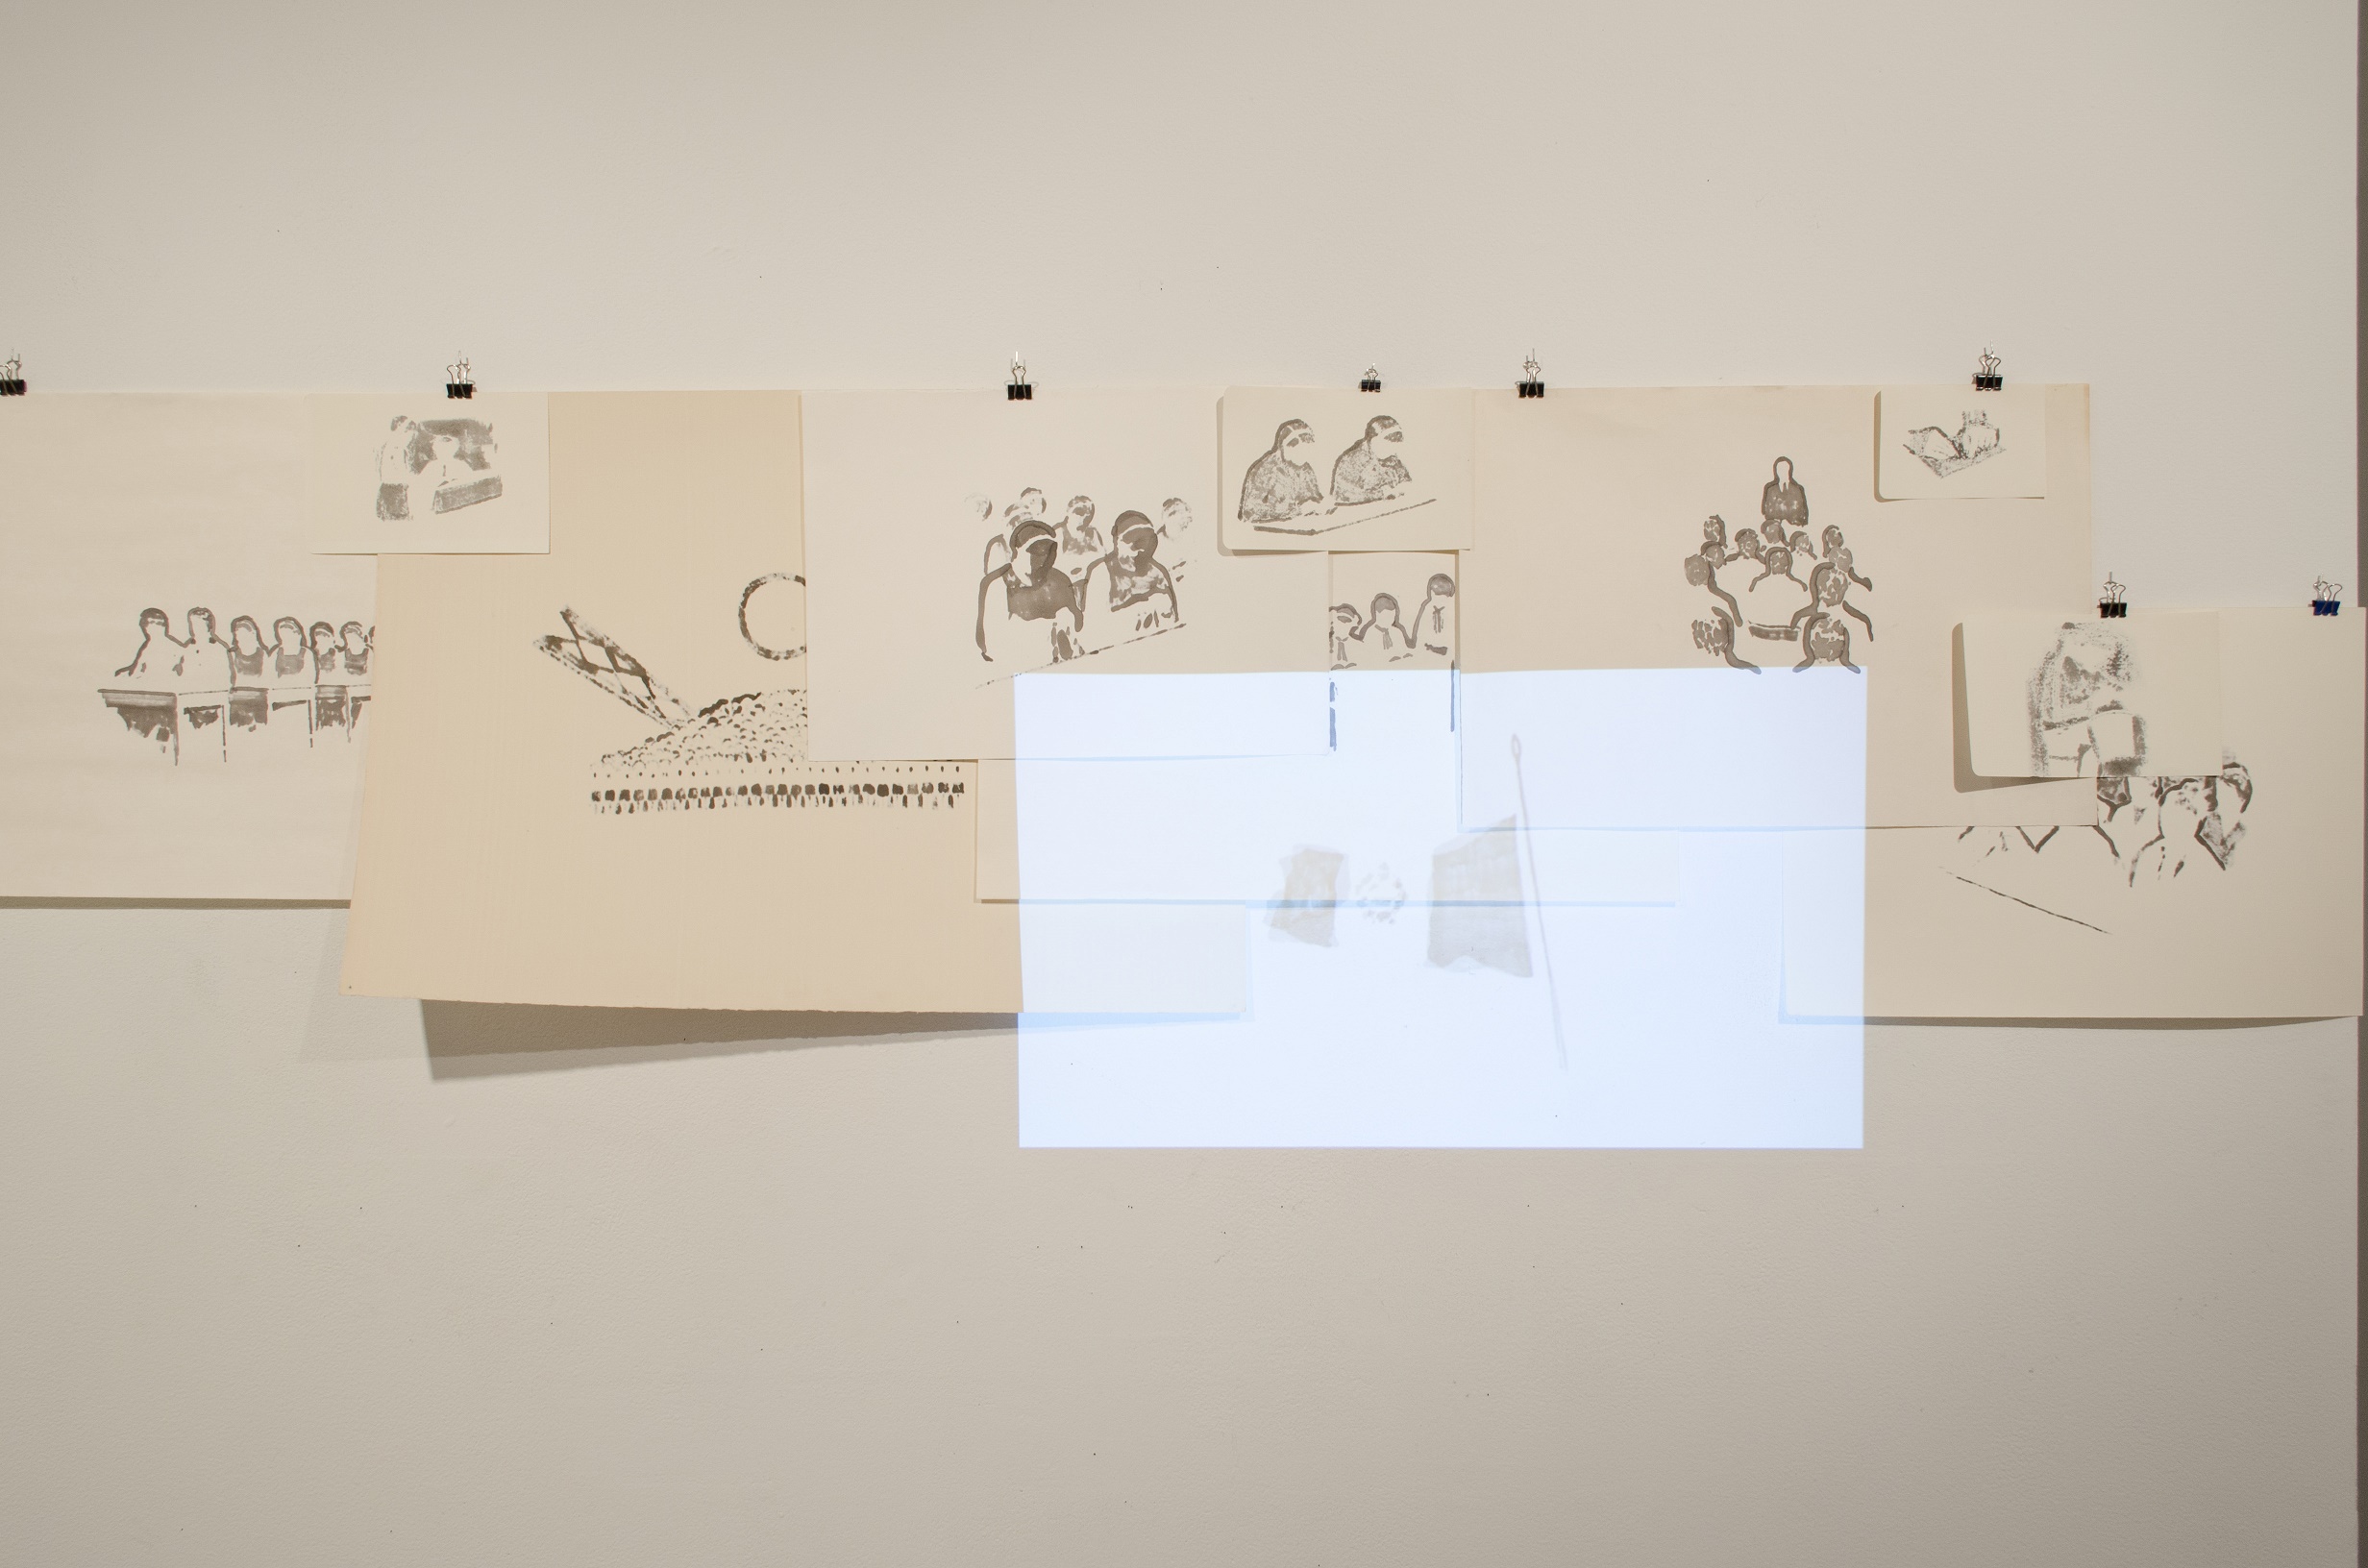 PREA TINERI PENTRU AMINTIRI (2015) felt pen on paper, loop animation, 180 x 60 cm